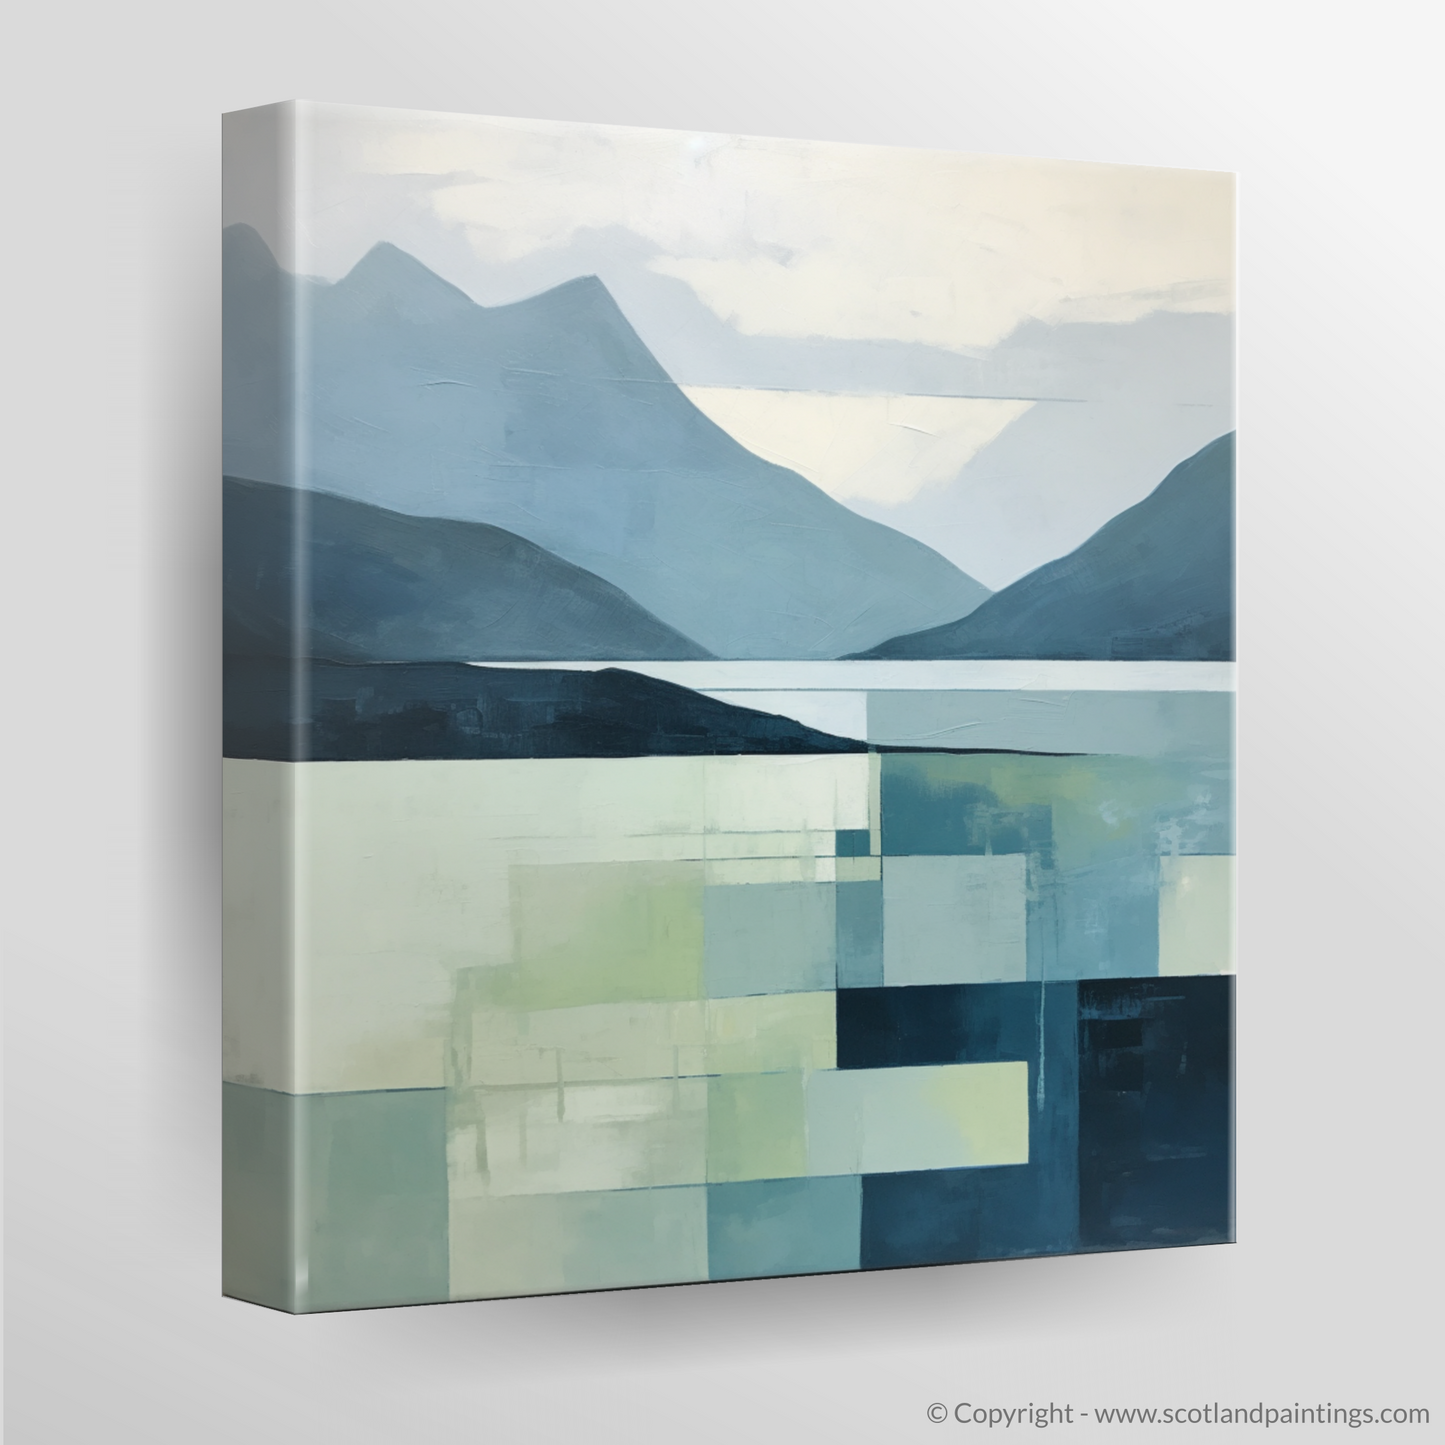 Loch Maree Reimagined: A Modern Minimalist Vision